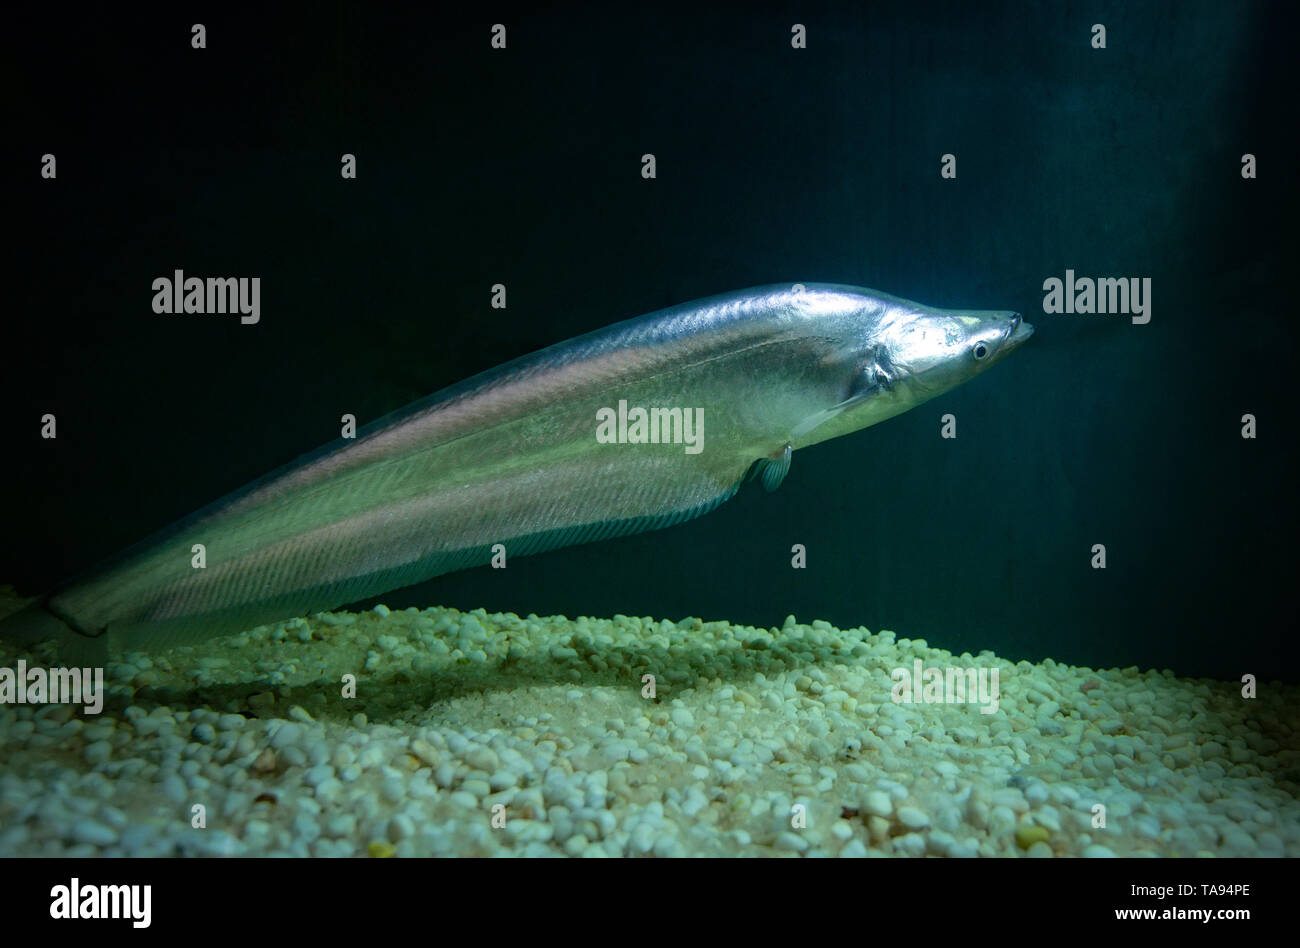 Common sheatfish swimming fish tank underwater aquarium / blue sheatfish Stock Photo